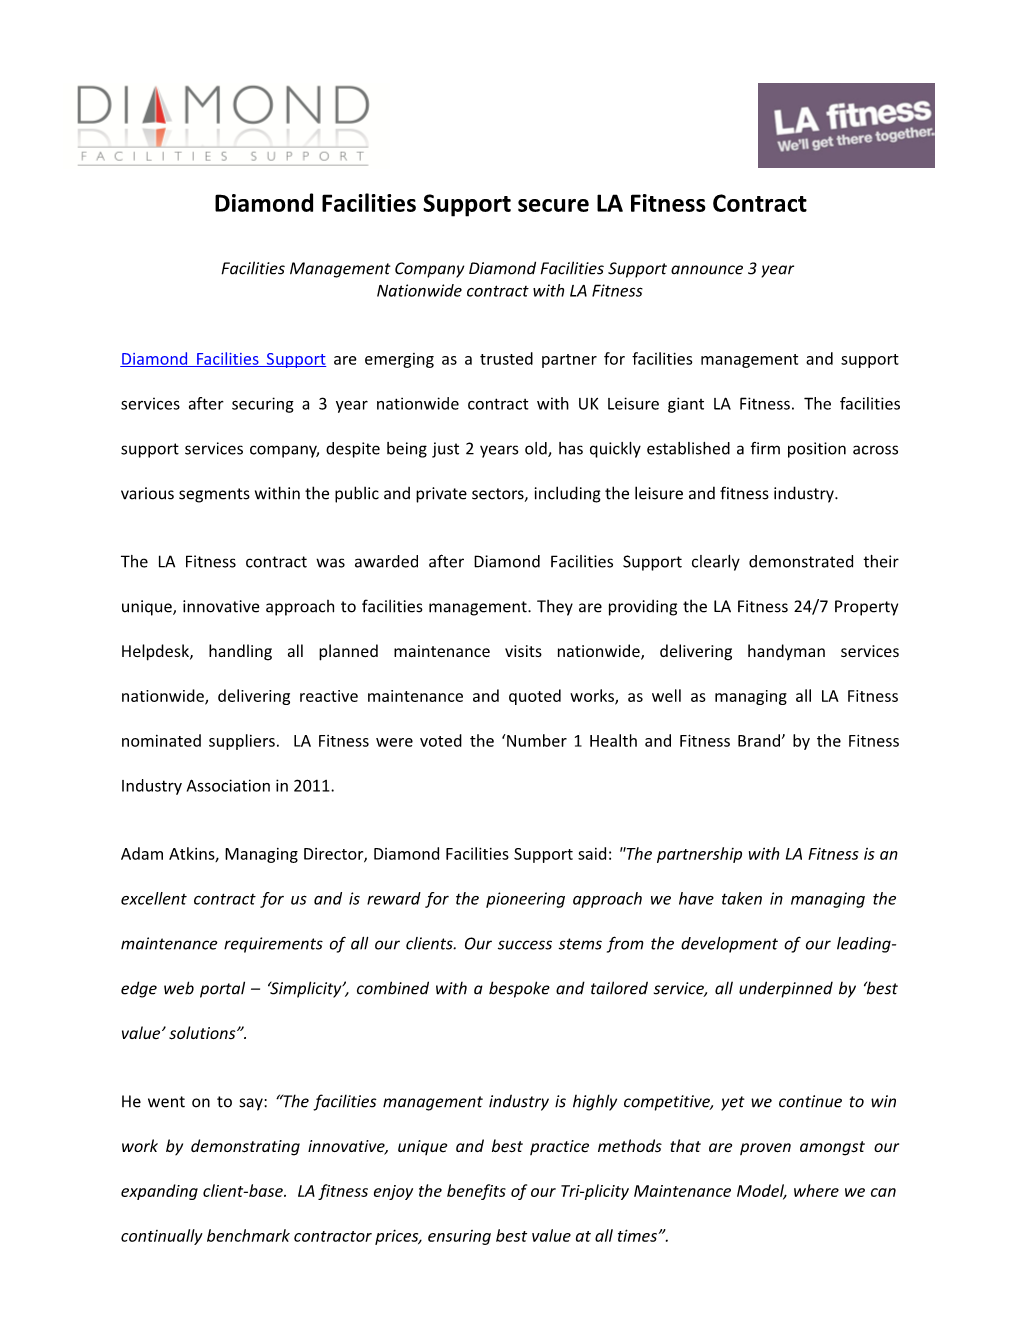 Diamond Facilities Support Secure LA Fitness Contract